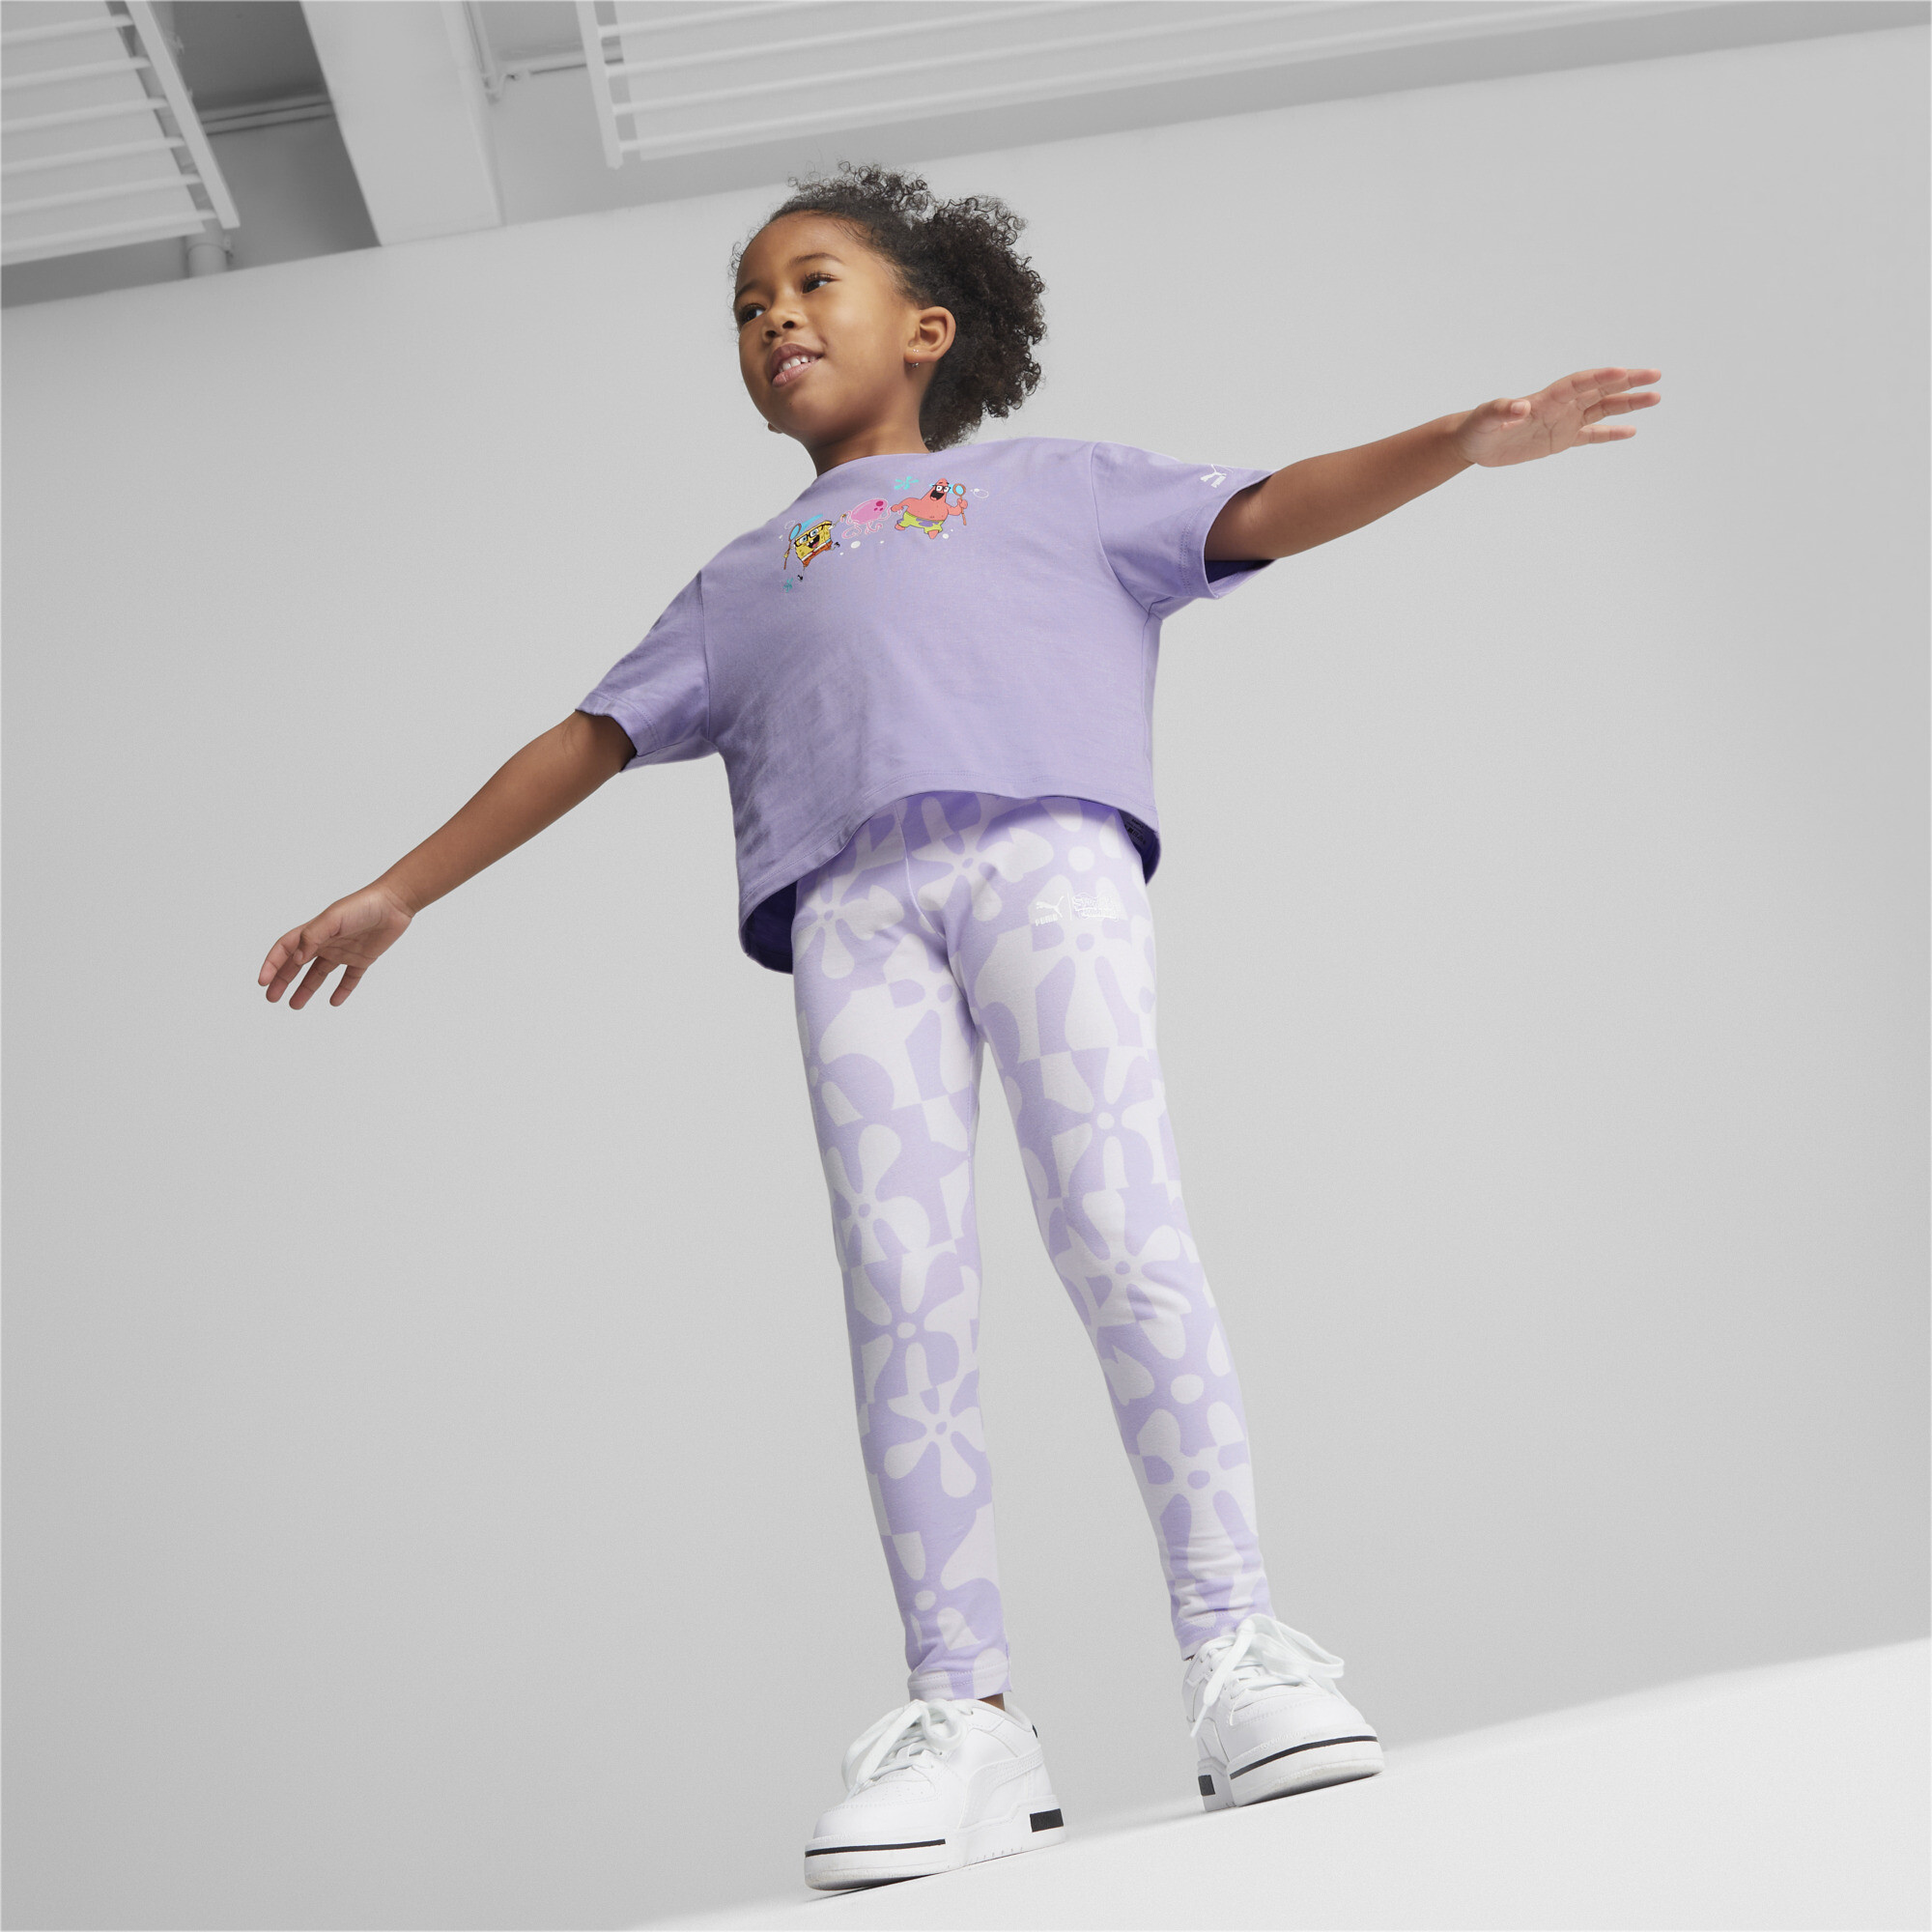 PUMA X SPONGEBOB T-Shirt Kids In Purple, Size 2-3 Months